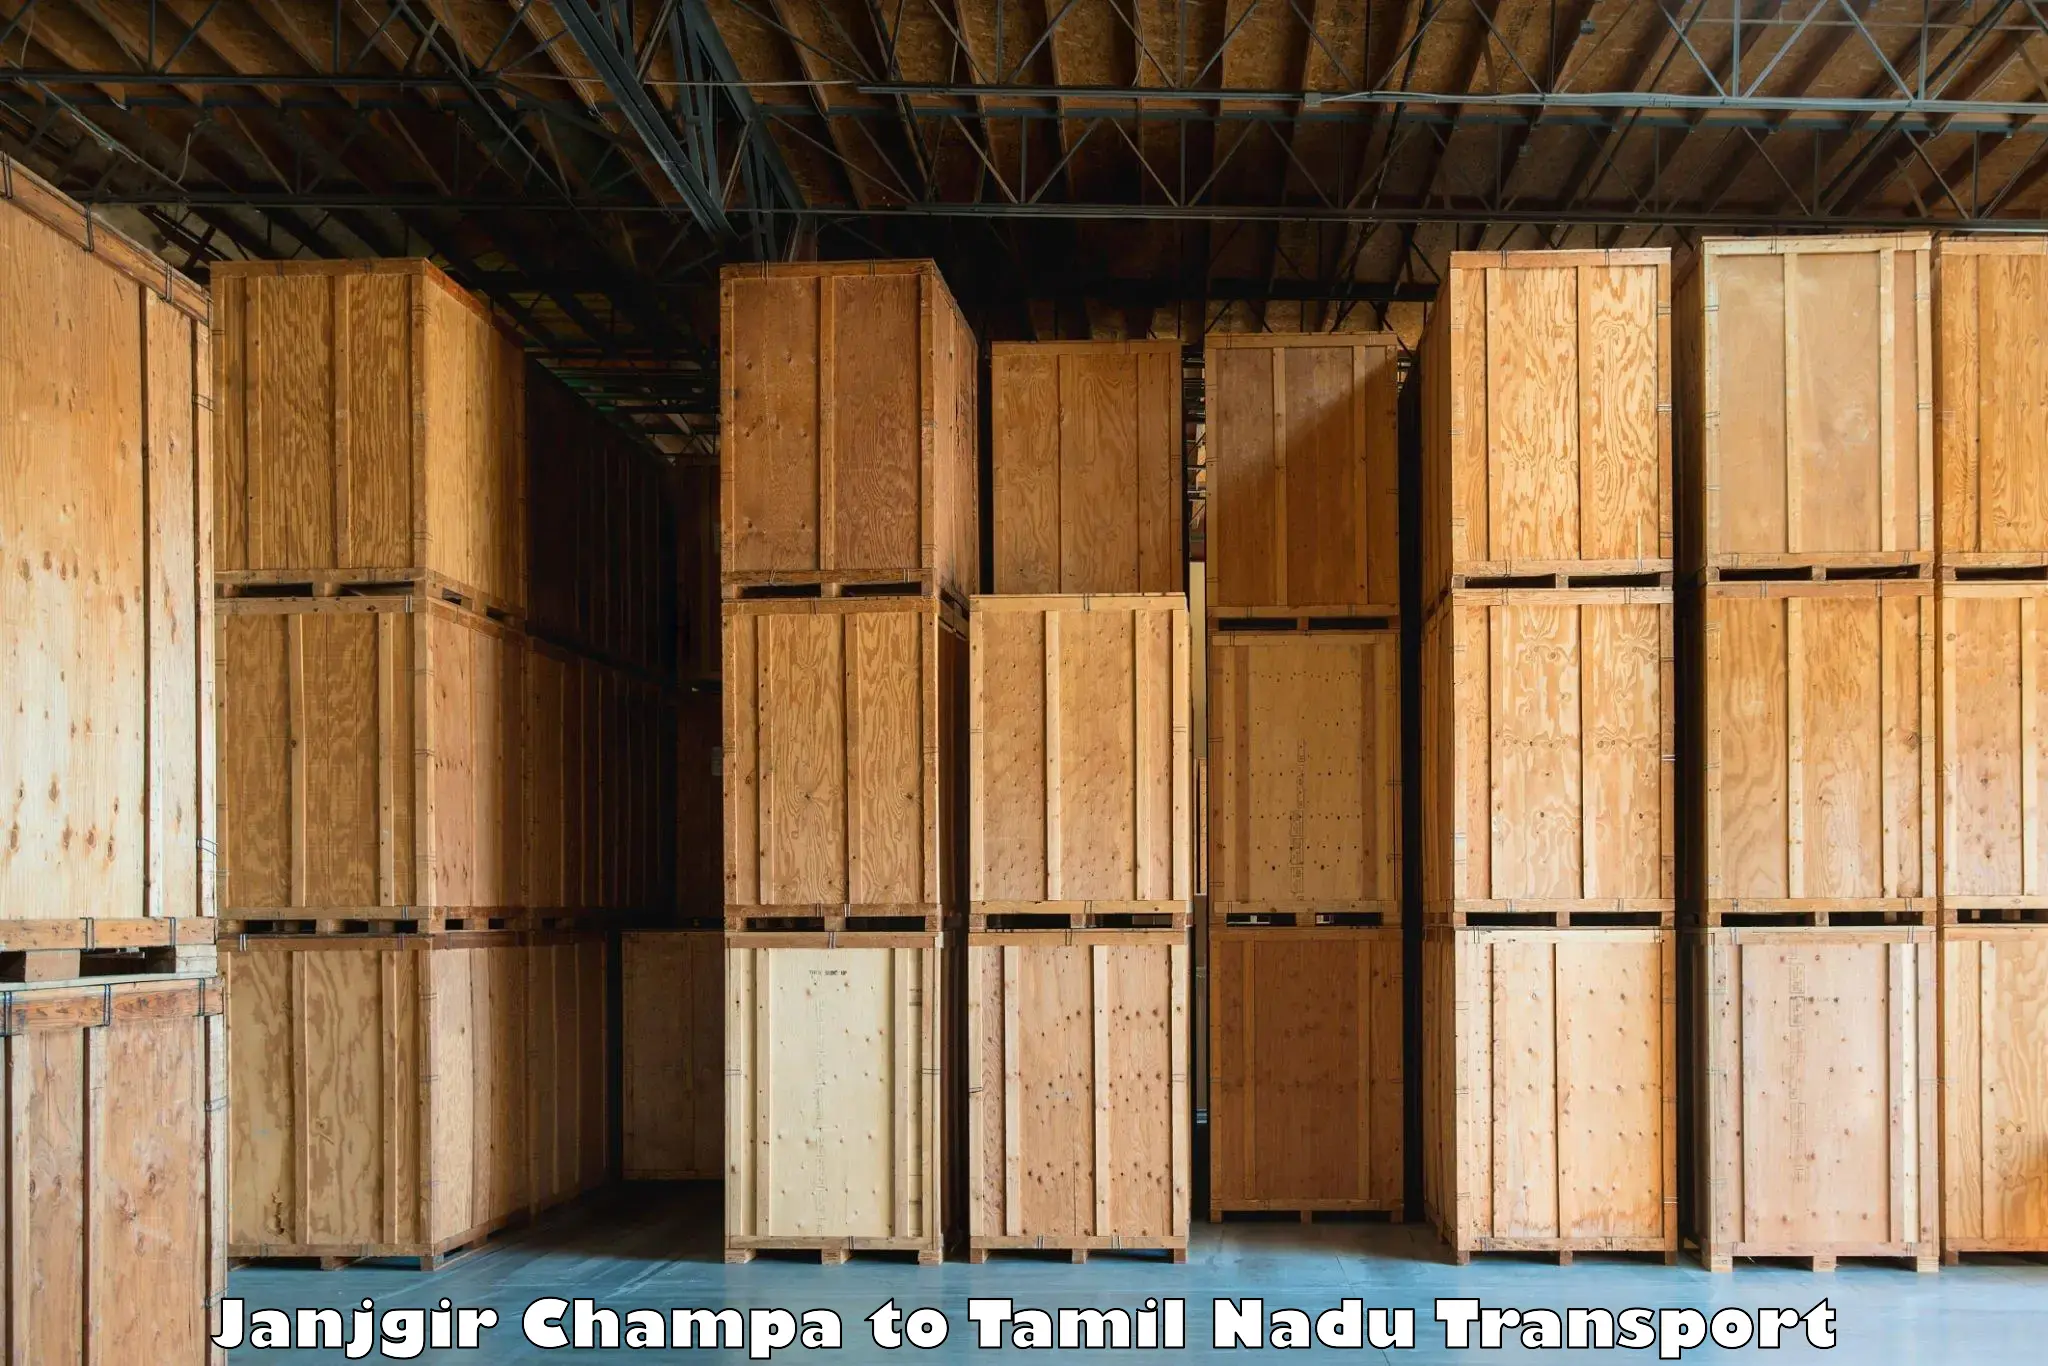 Container transportation services Janjgir Champa to Sriperumbudur